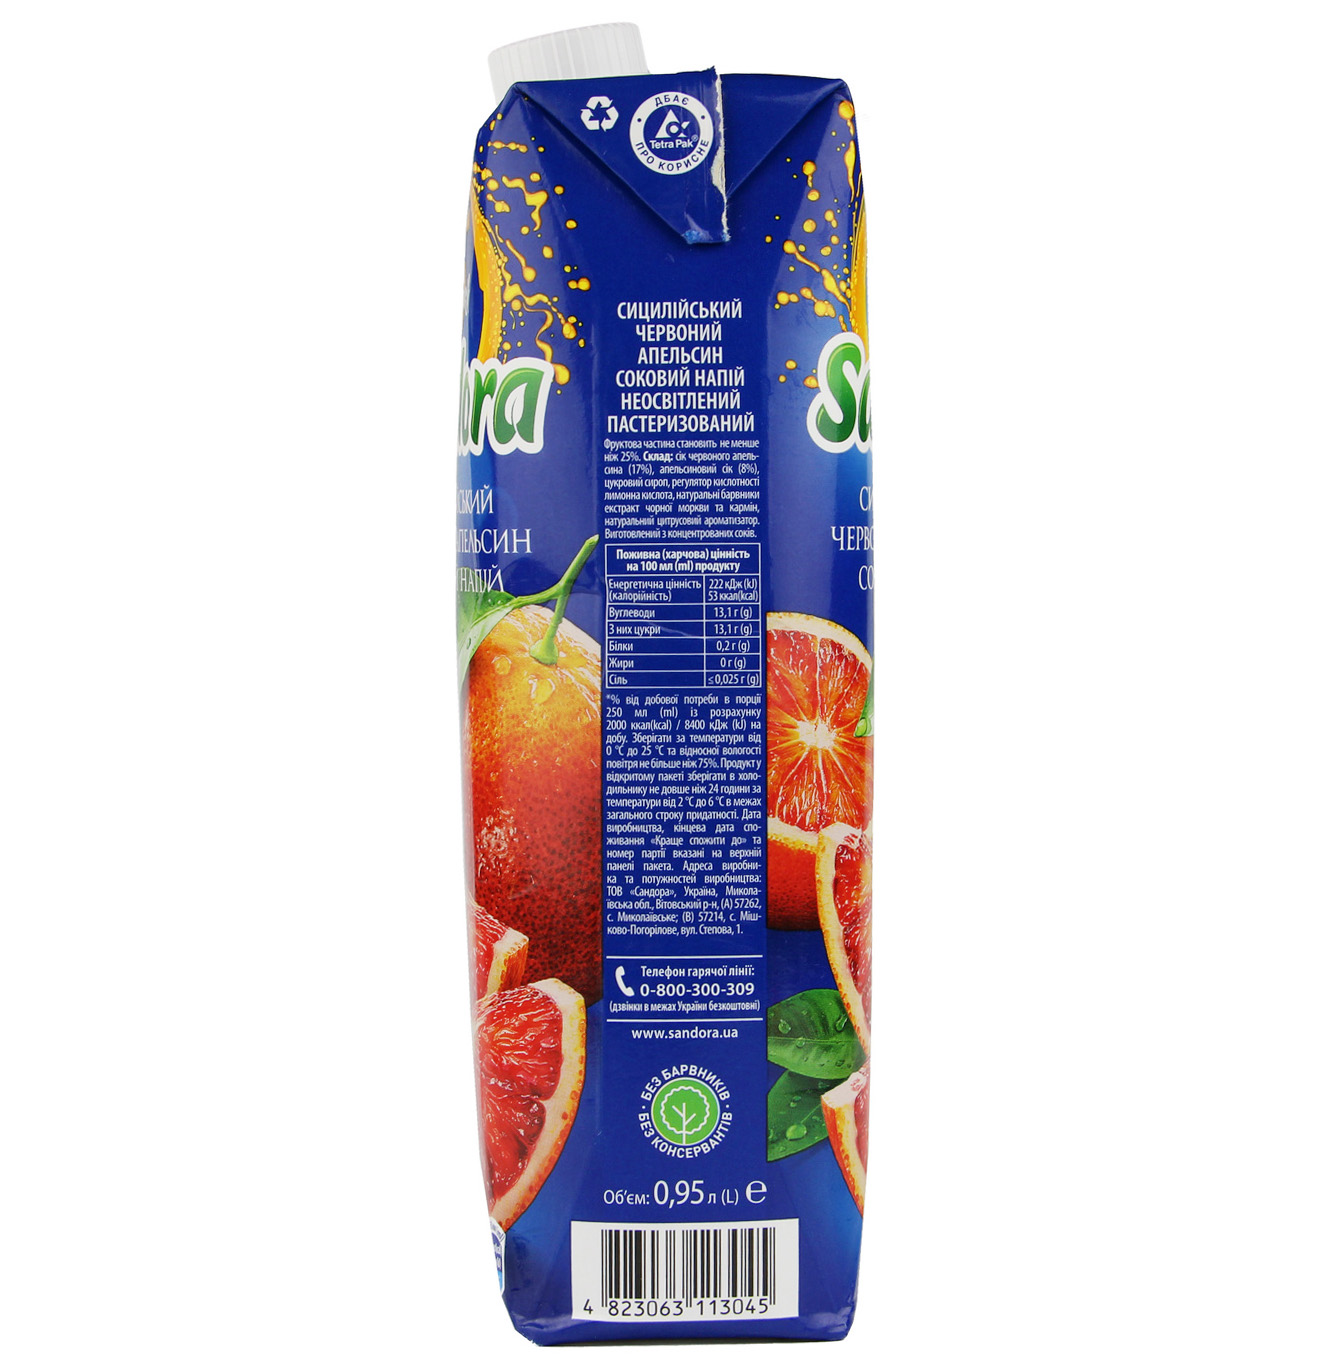 Sandora Sicilian Red Orange Juice Drink 950ml 2